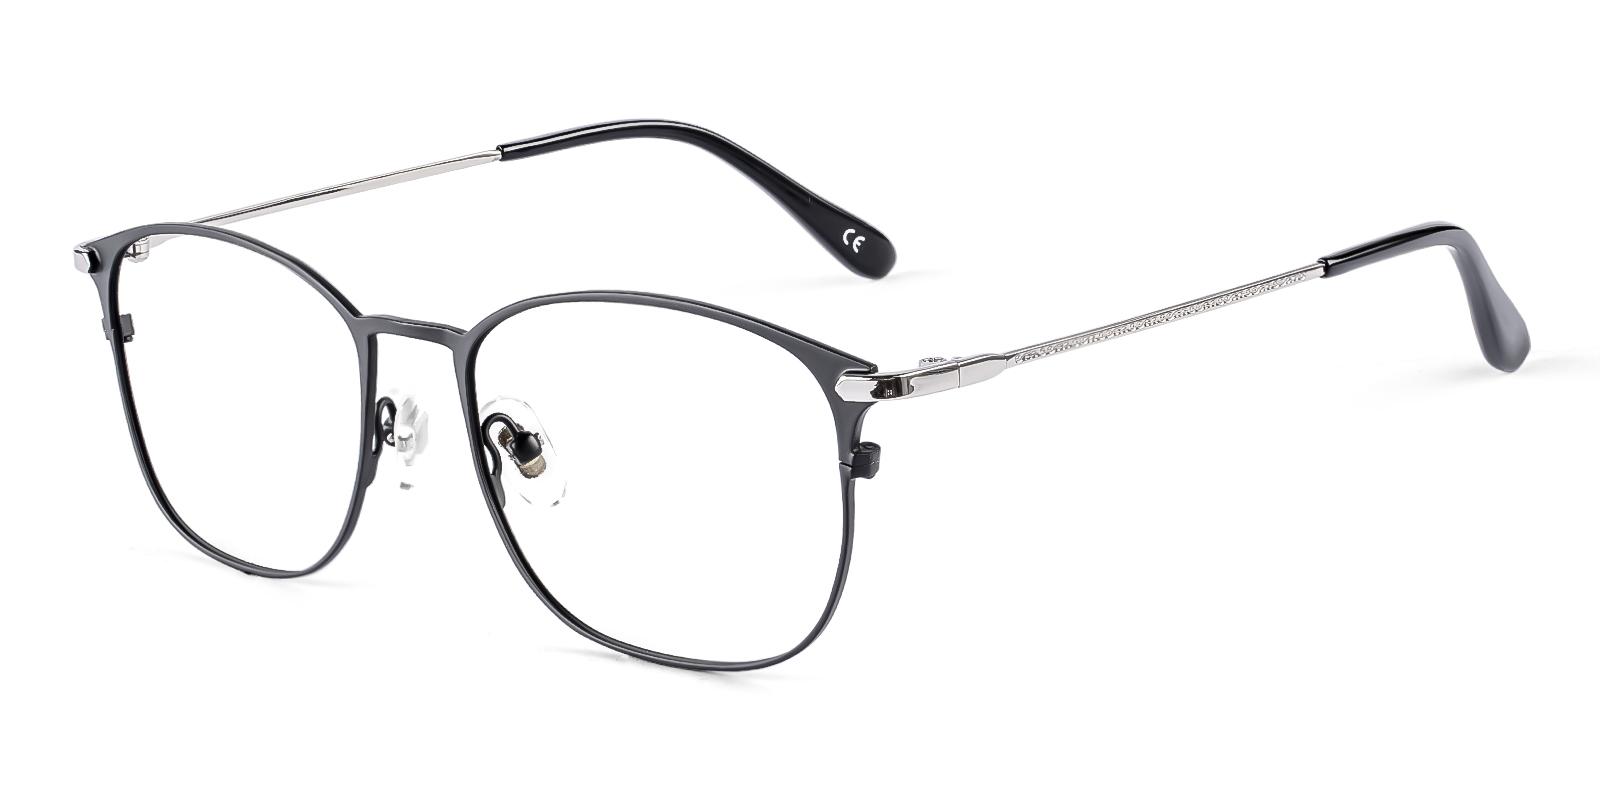 Nedal Silver Metal Eyeglasses , NosePads Frames from ABBE Glasses